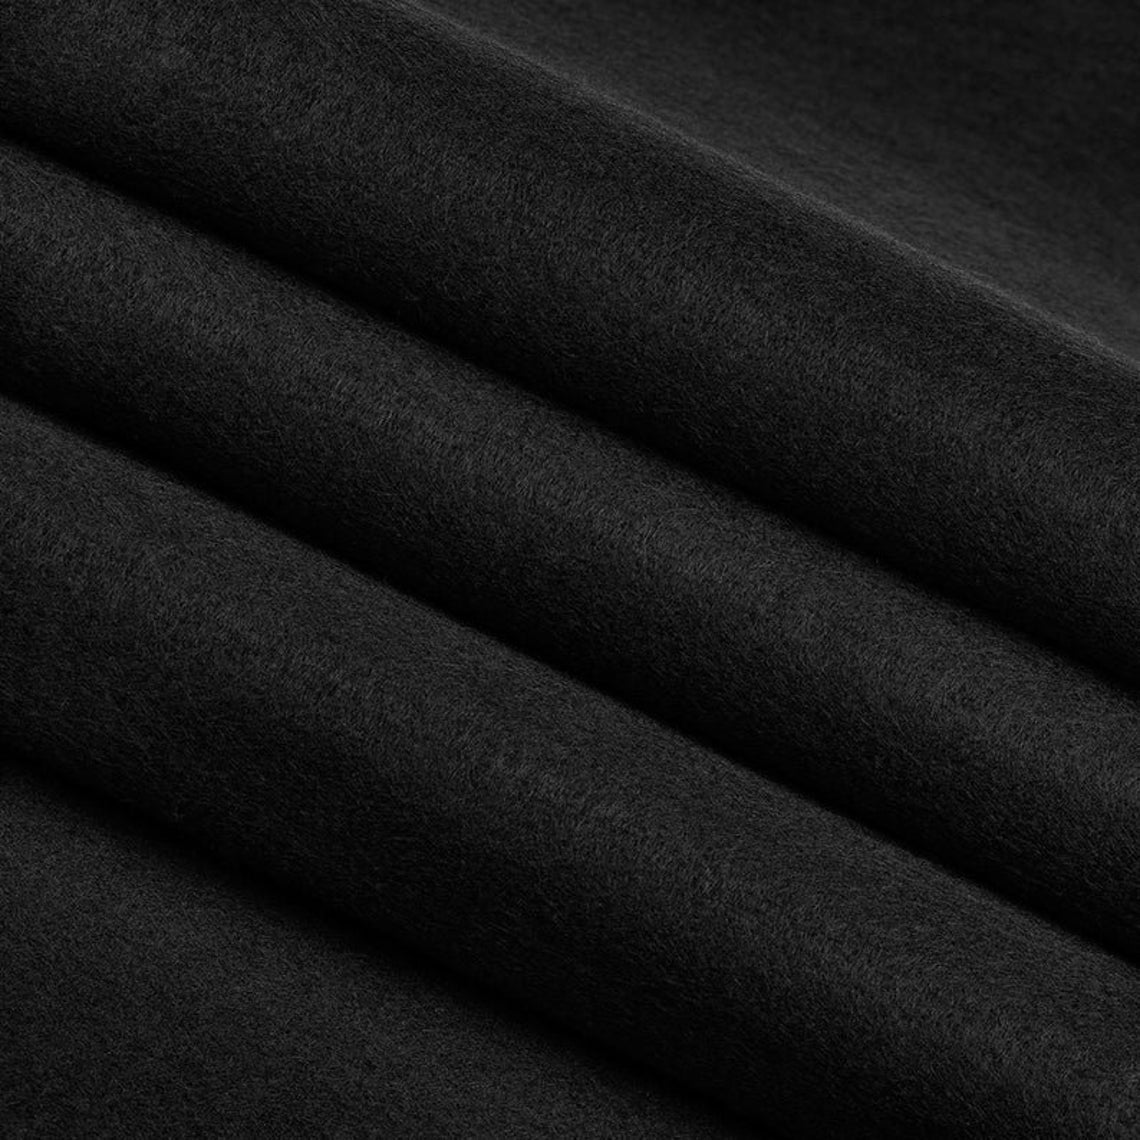 72" Wide 1.6 mm Thick Acrylic Black Felt Fabric By The YardICE FABRICSICE FABRICSPer Yard1.6mm Thick72" Wide 1.6 mm Thick Acrylic Black Felt Fabric By The Yard ICE FABRICS